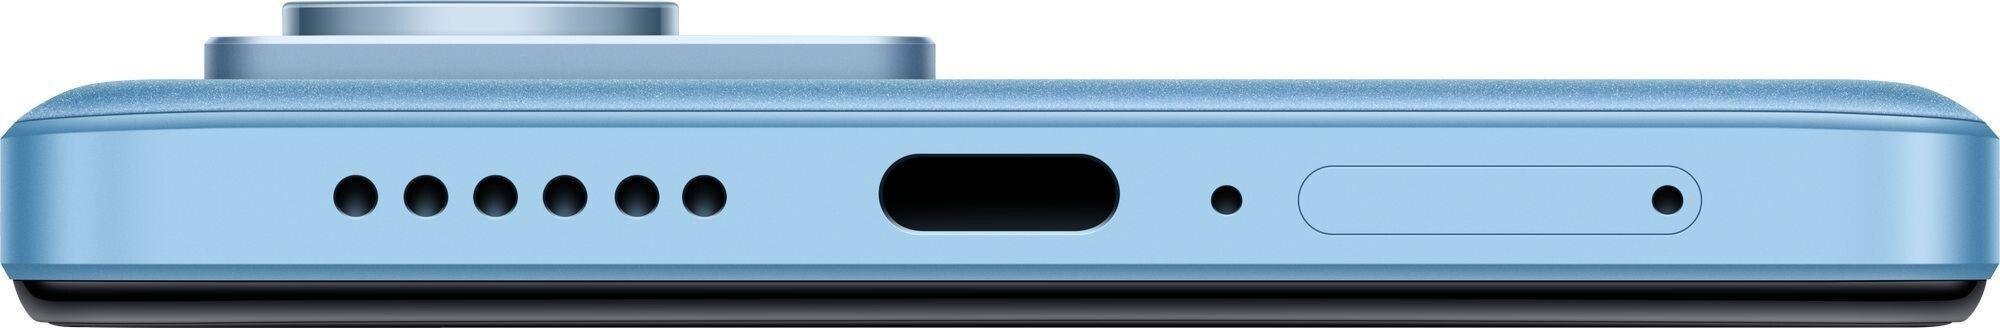 Смартфон POCO X4 GT 8/128GB Blue